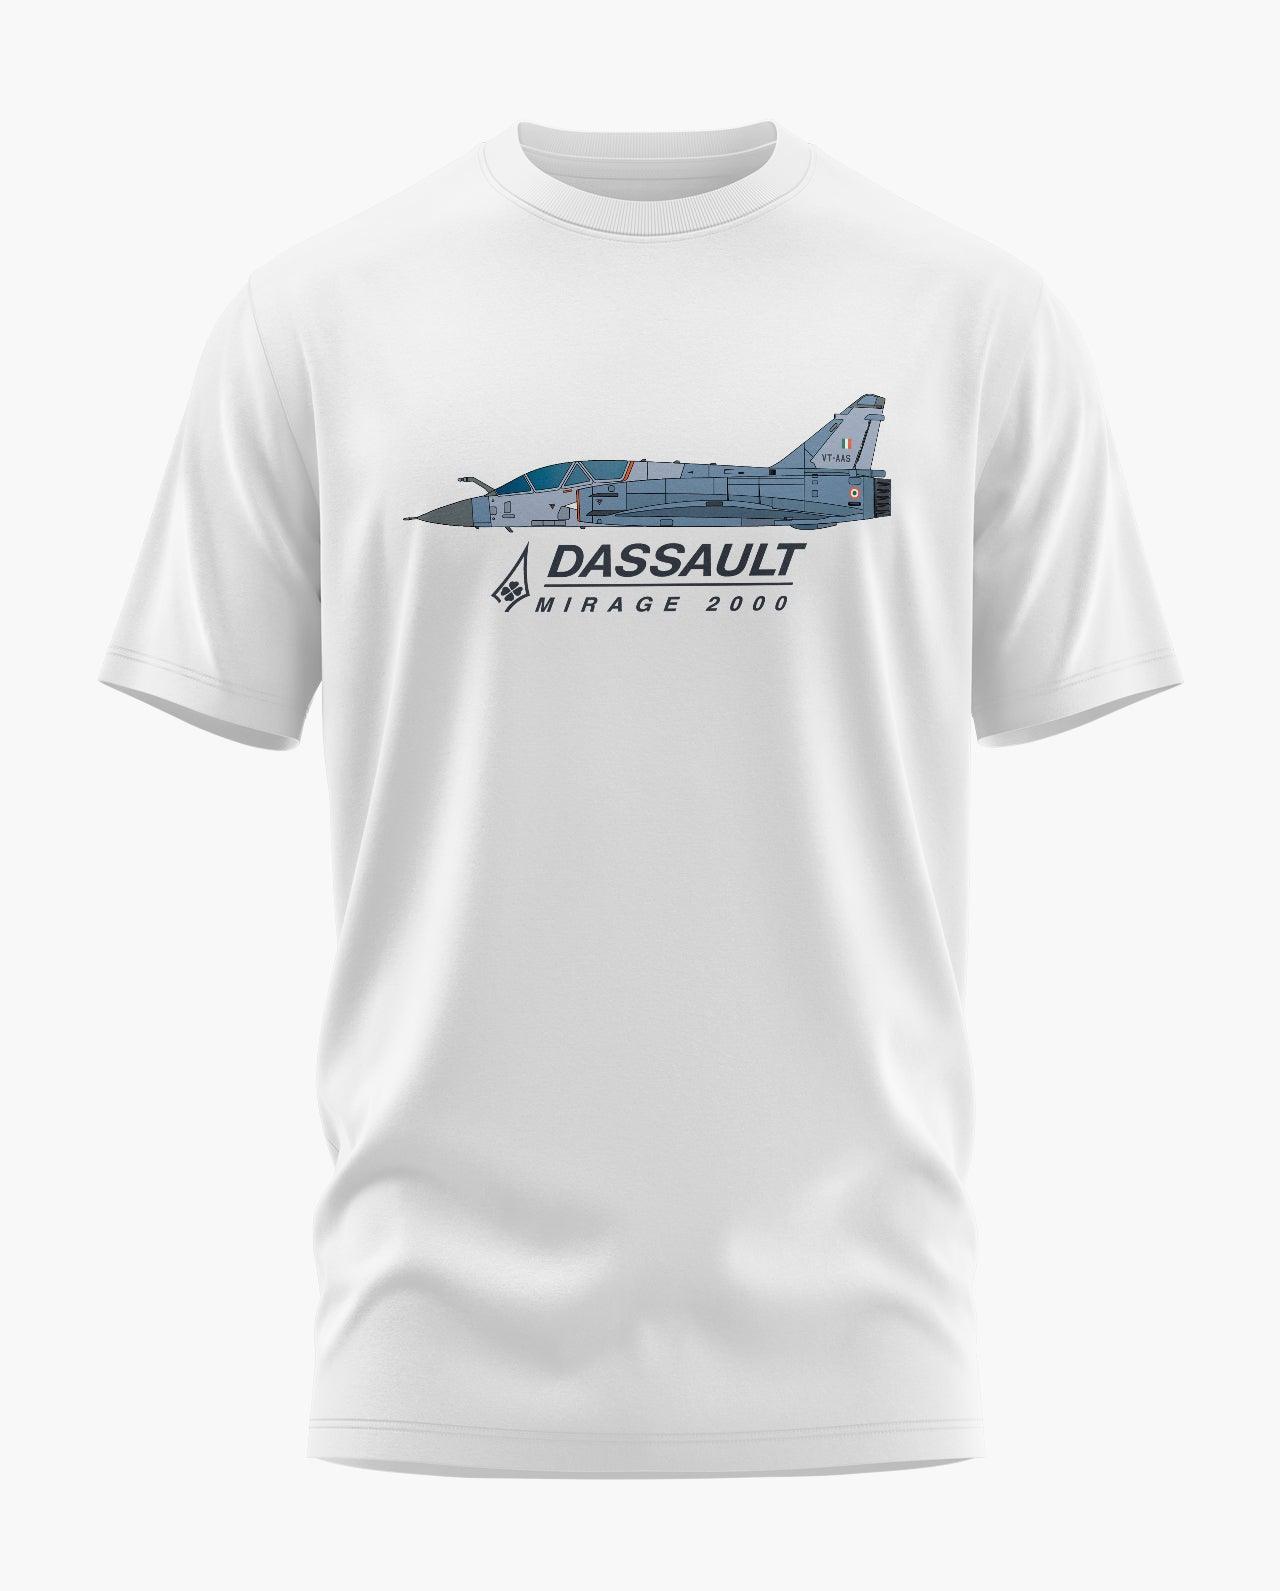 Dassault Mirage 2000 T-Shirt - Aero Armour